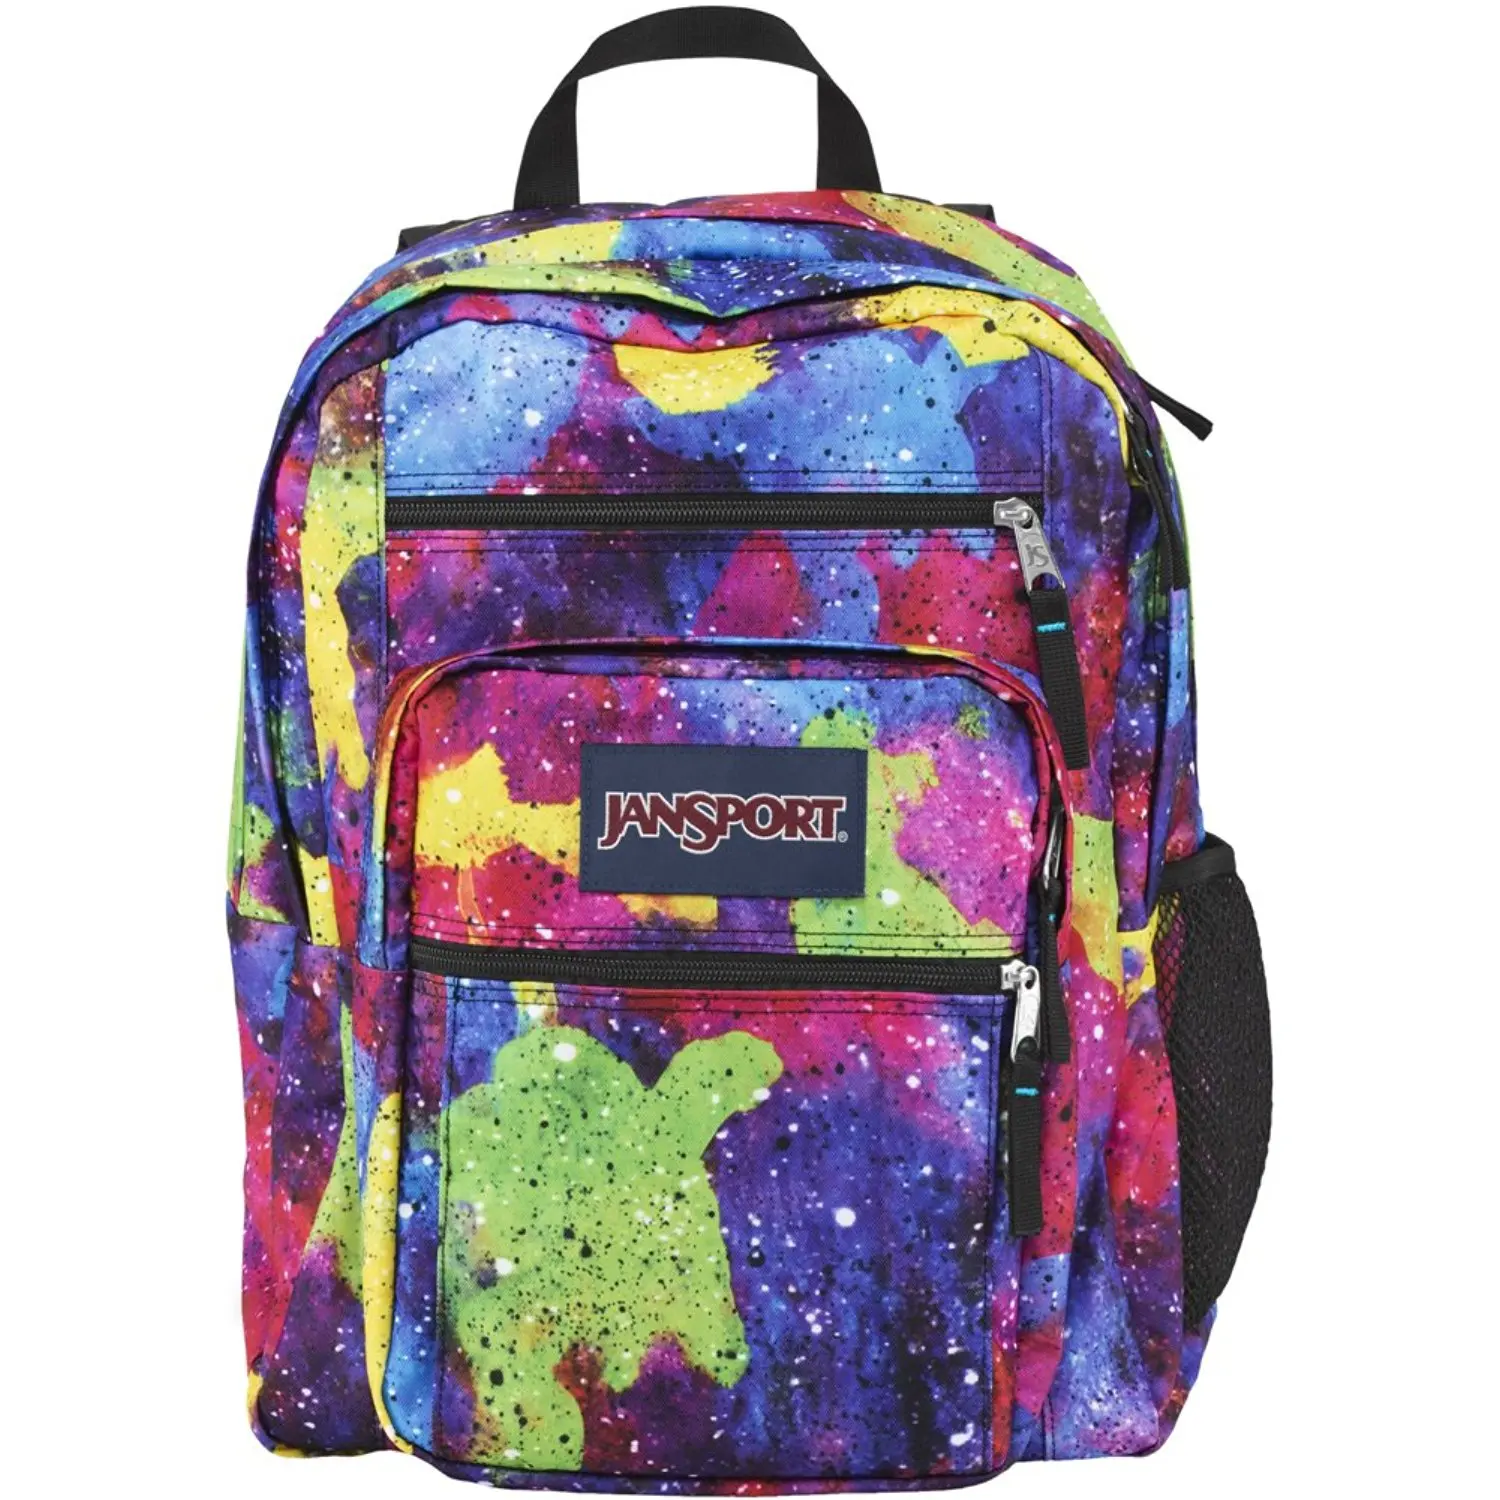 jansport galaxy backpack amazon